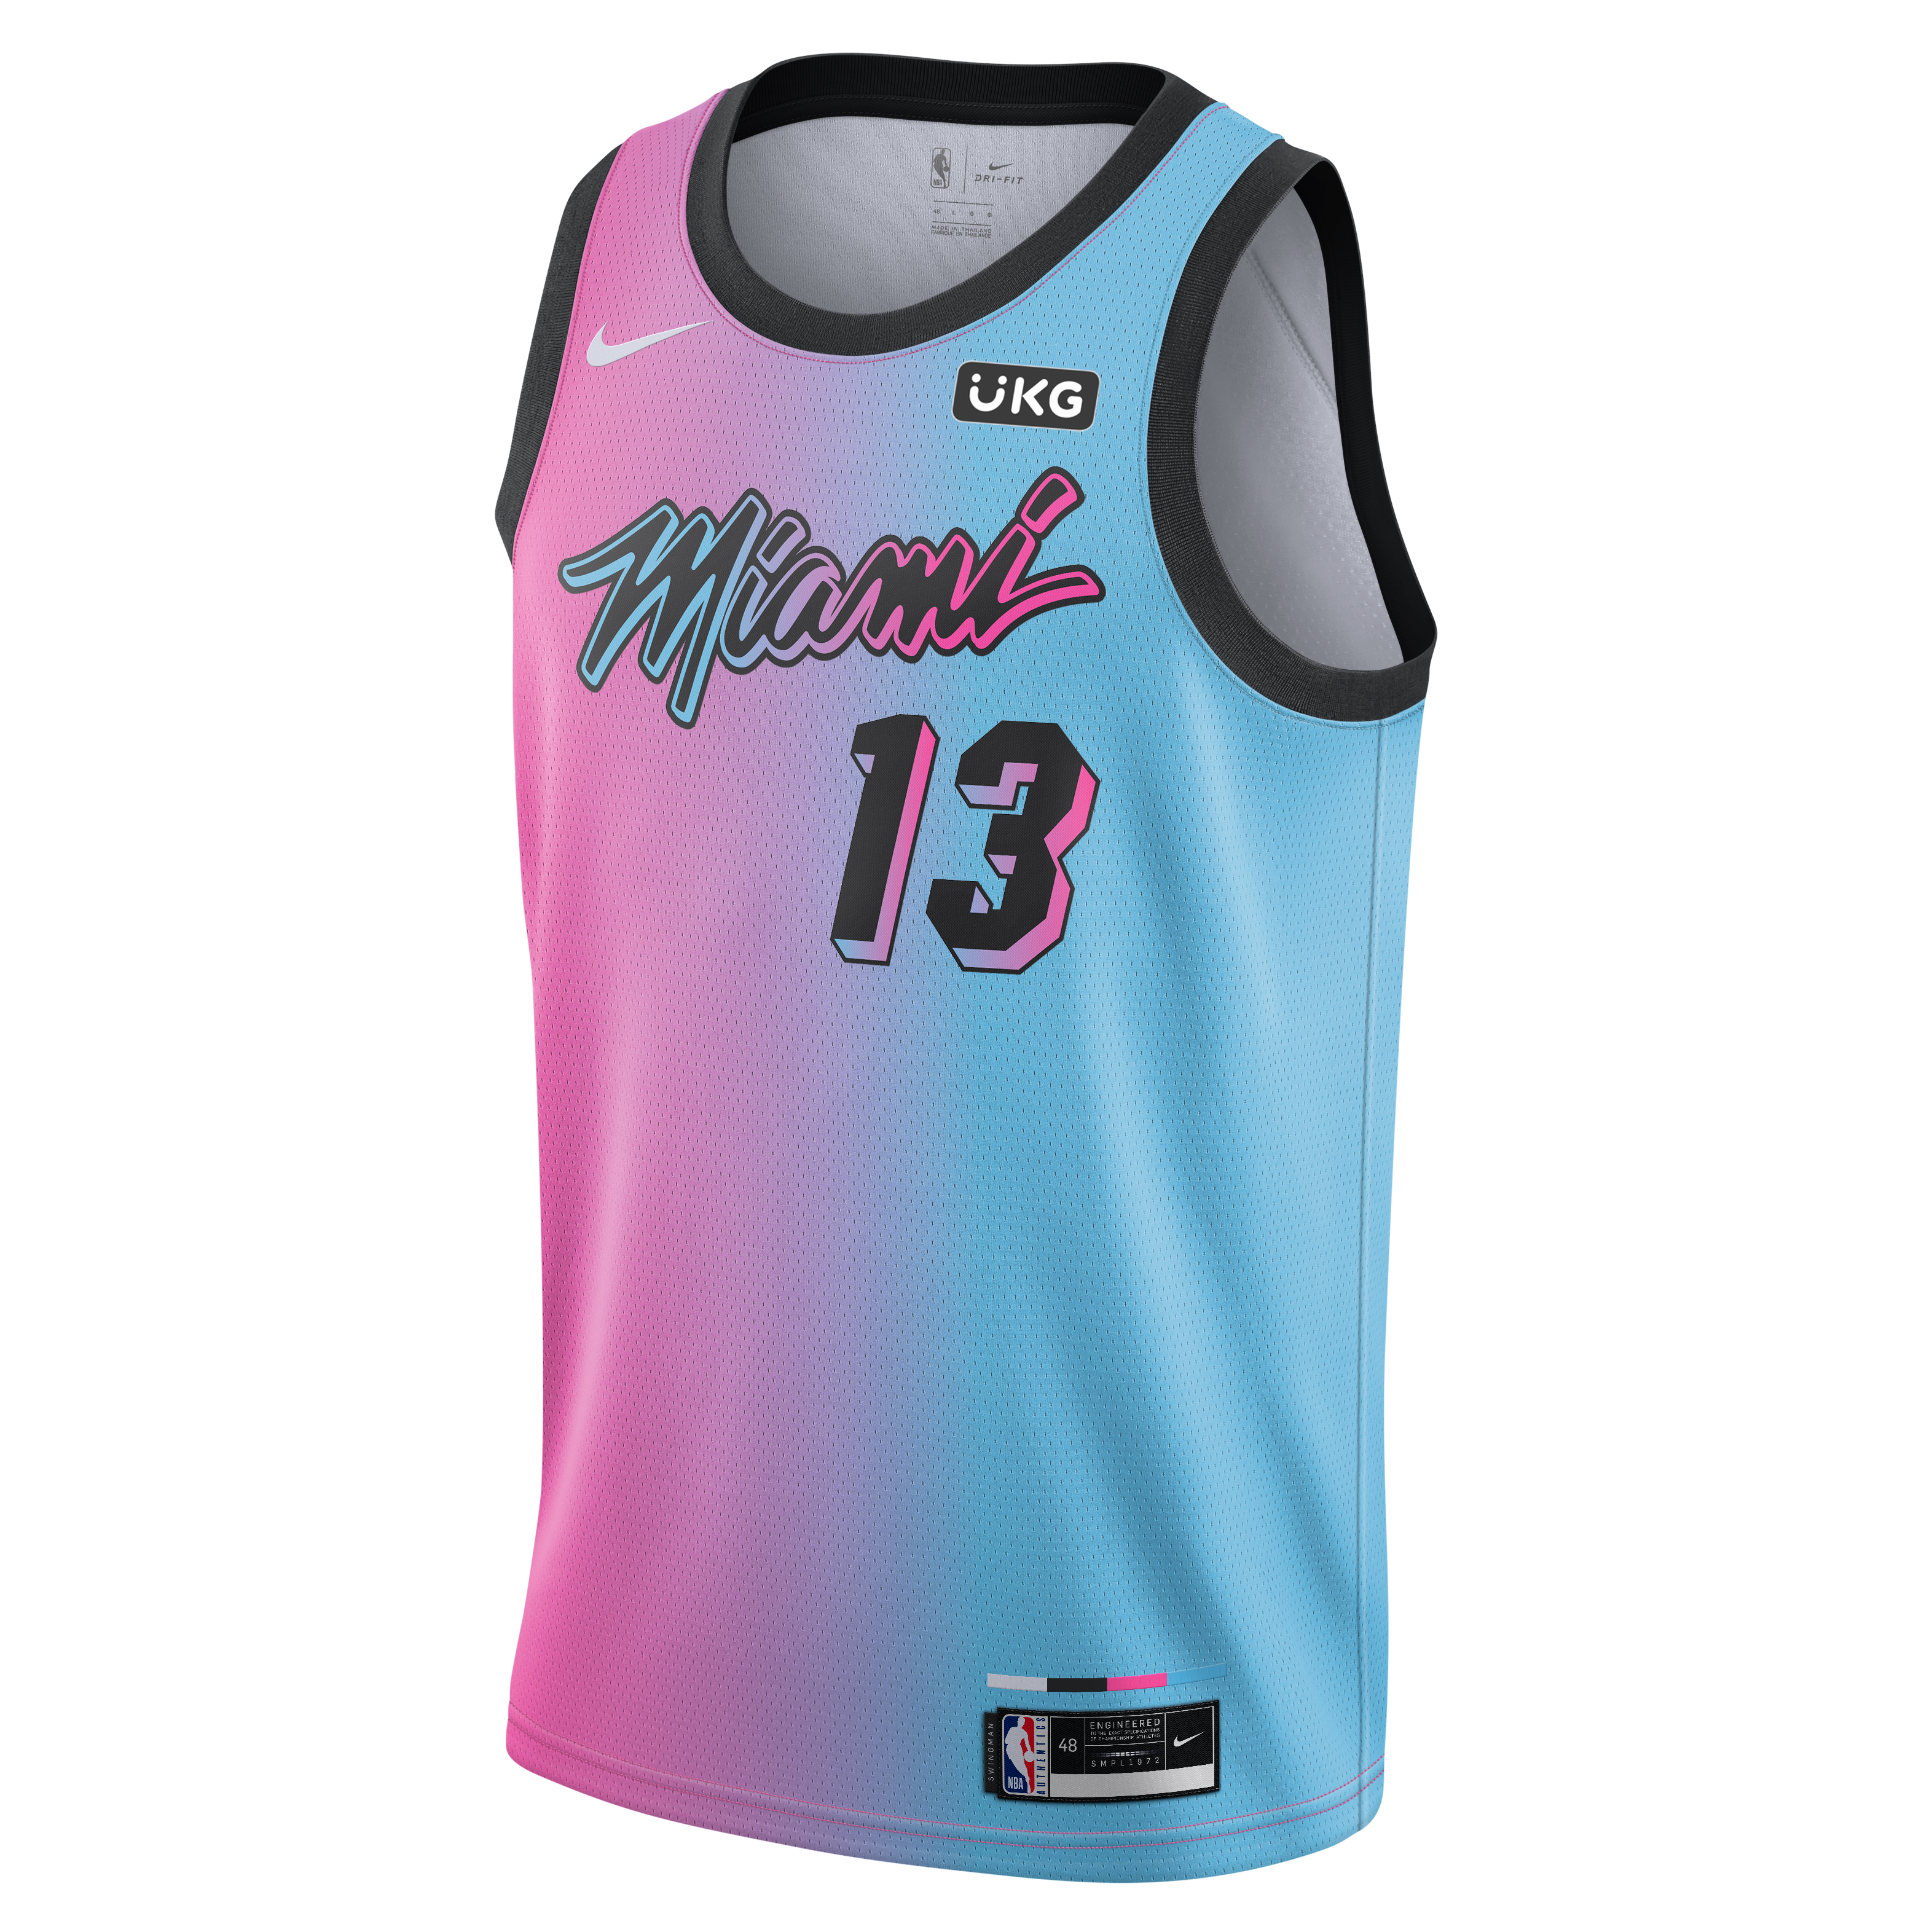 Nike Men's Basketball Jersey NBA Miami Heat Vice Bam Ado Size 44 (S)  NWT